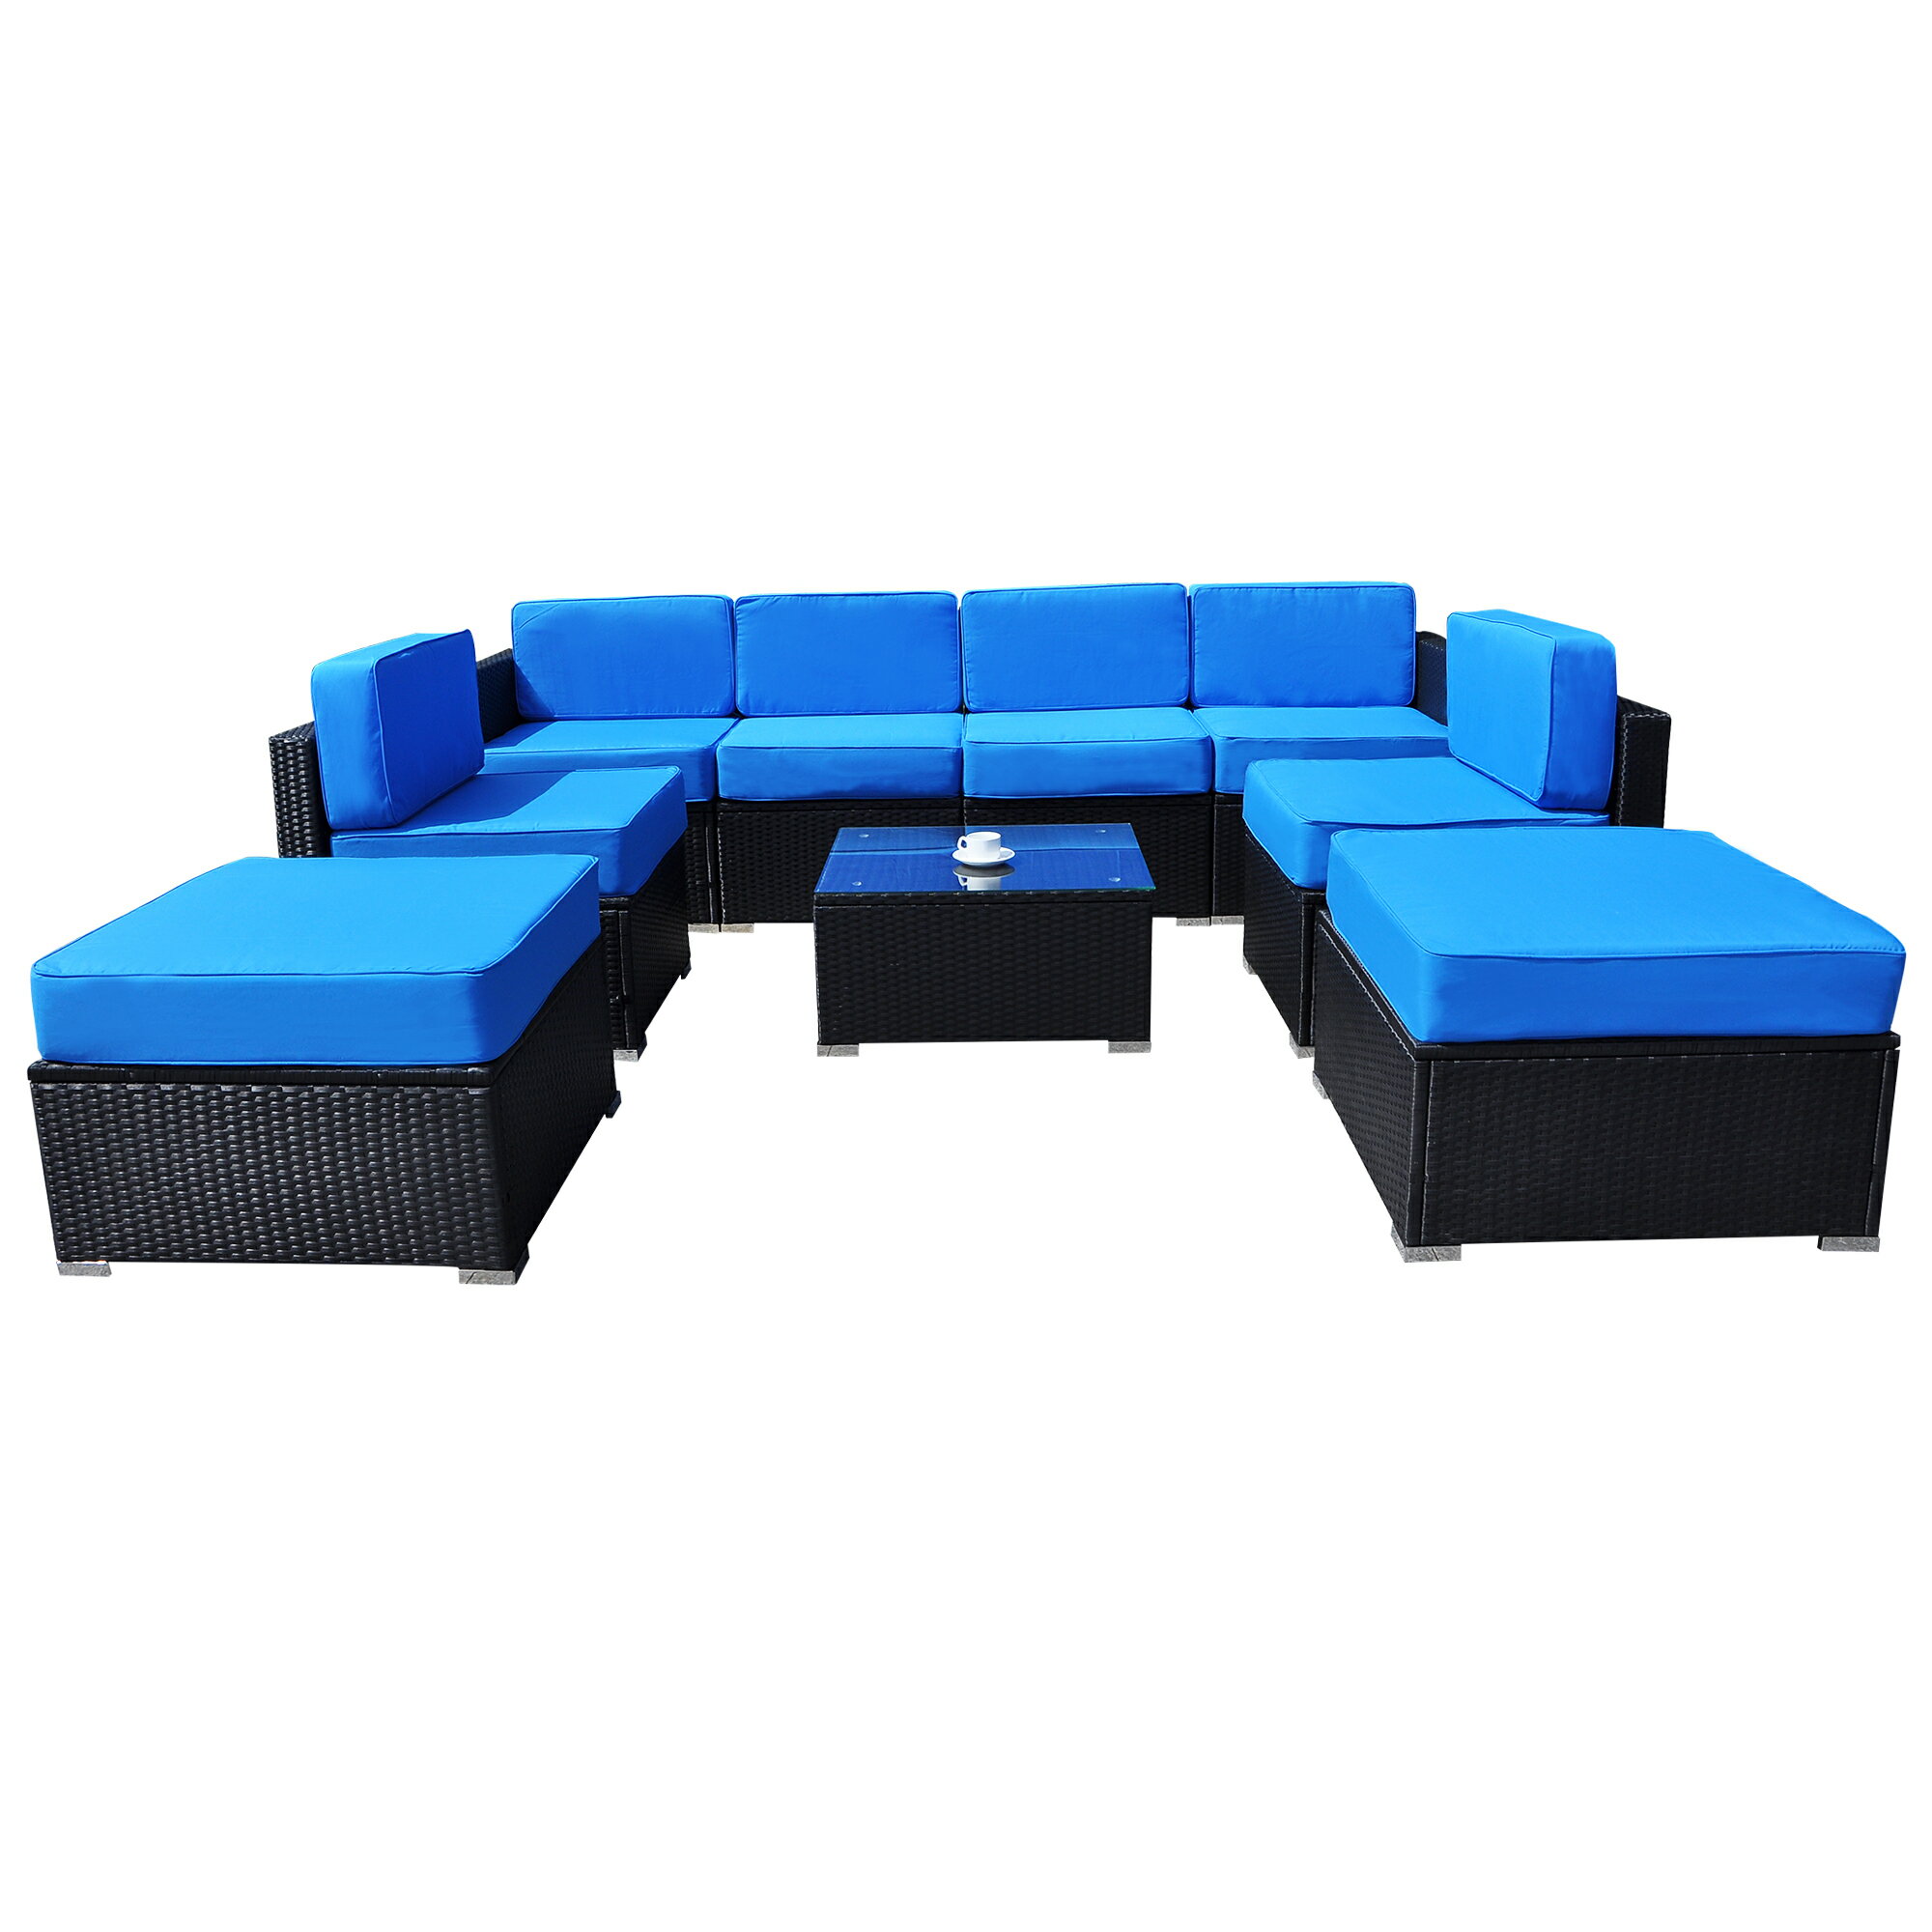 Mcombo Mcombo 6082 9pc Bigger Size Outdoor Furniture Luxury Patio